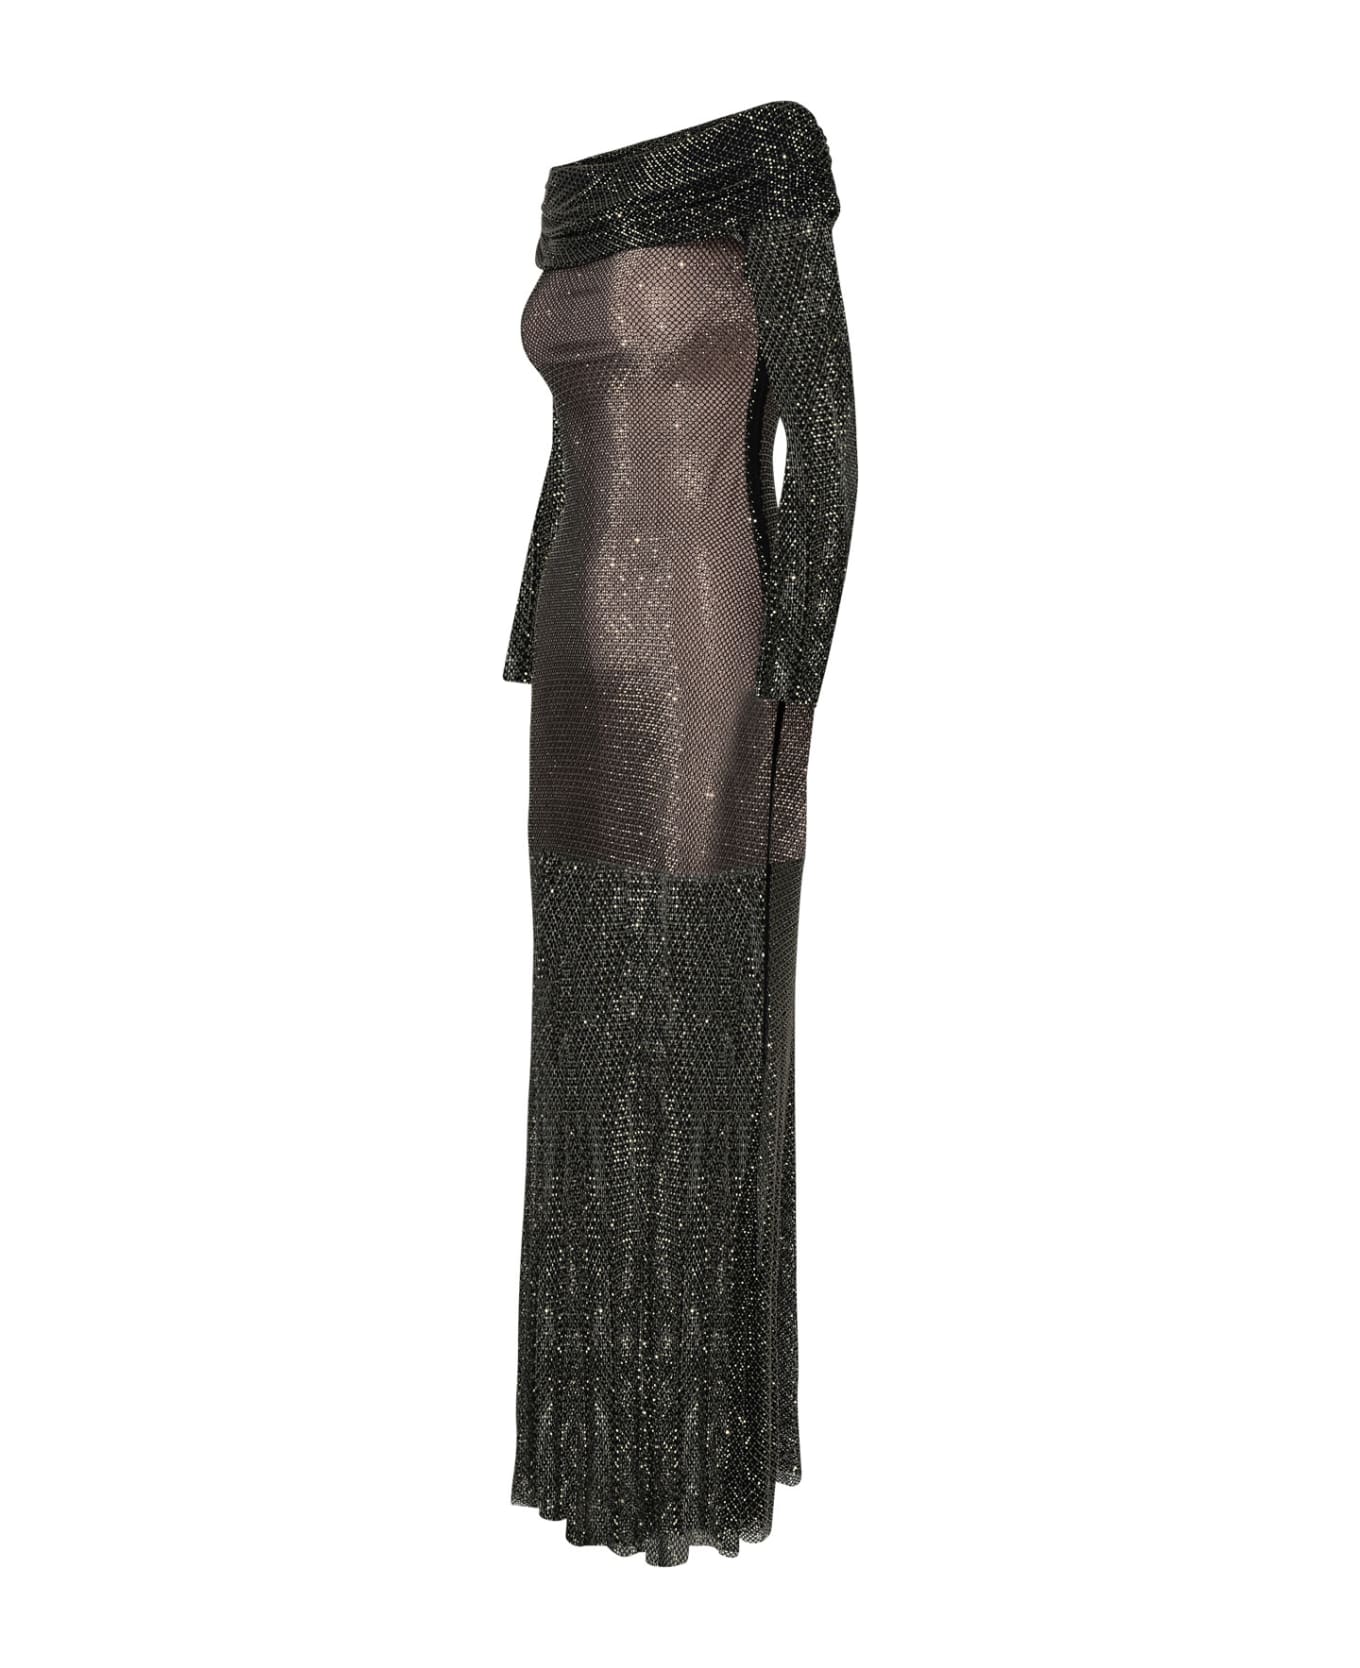 self-portrait Rhinestone Dress In Black Polyester - Black